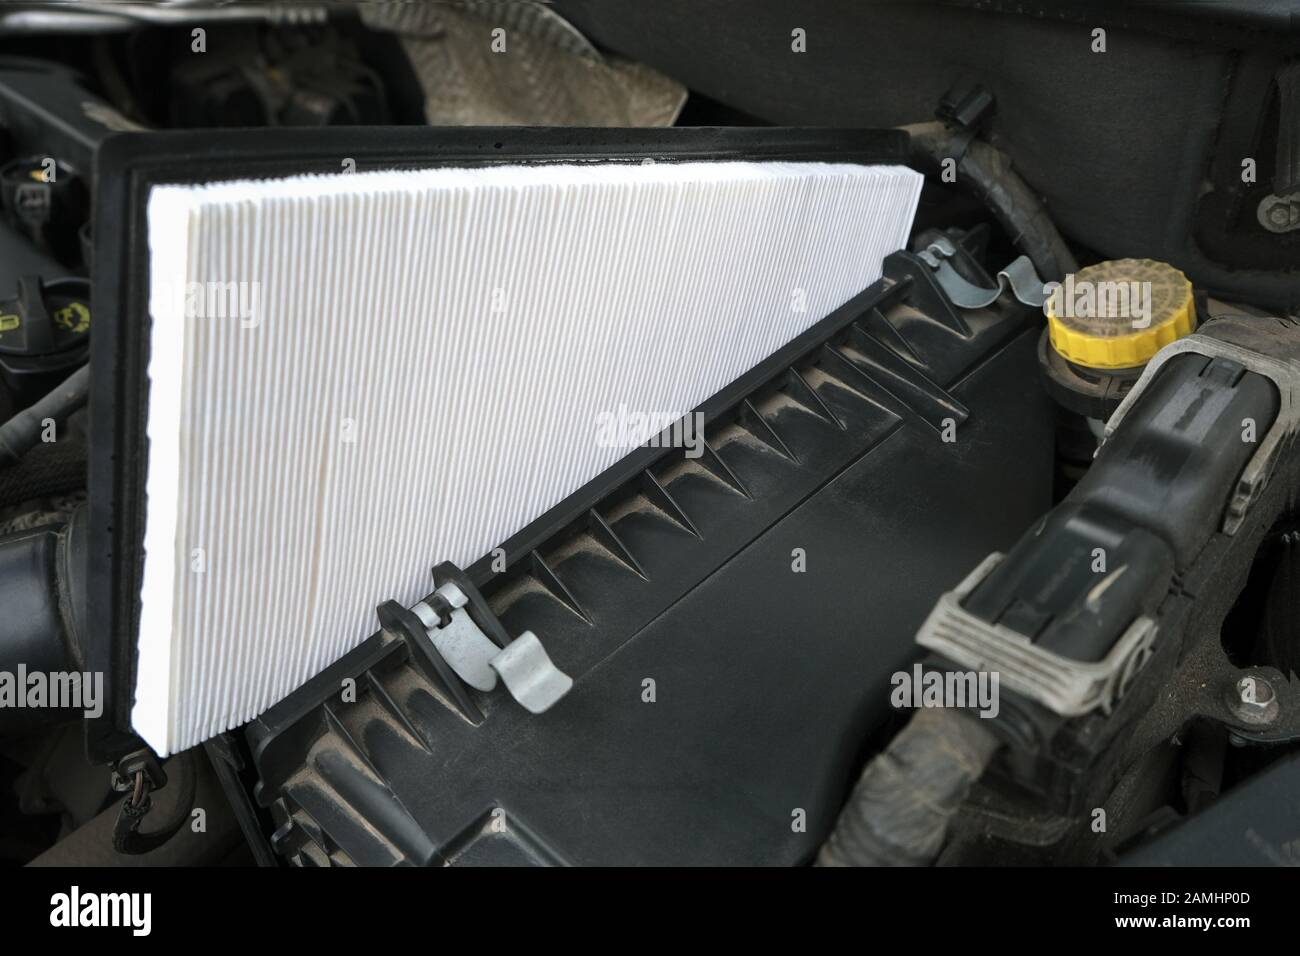 Vehicle maintenance, new fresh Intake air filter, car servicing and repair engine procedure Stock Photo